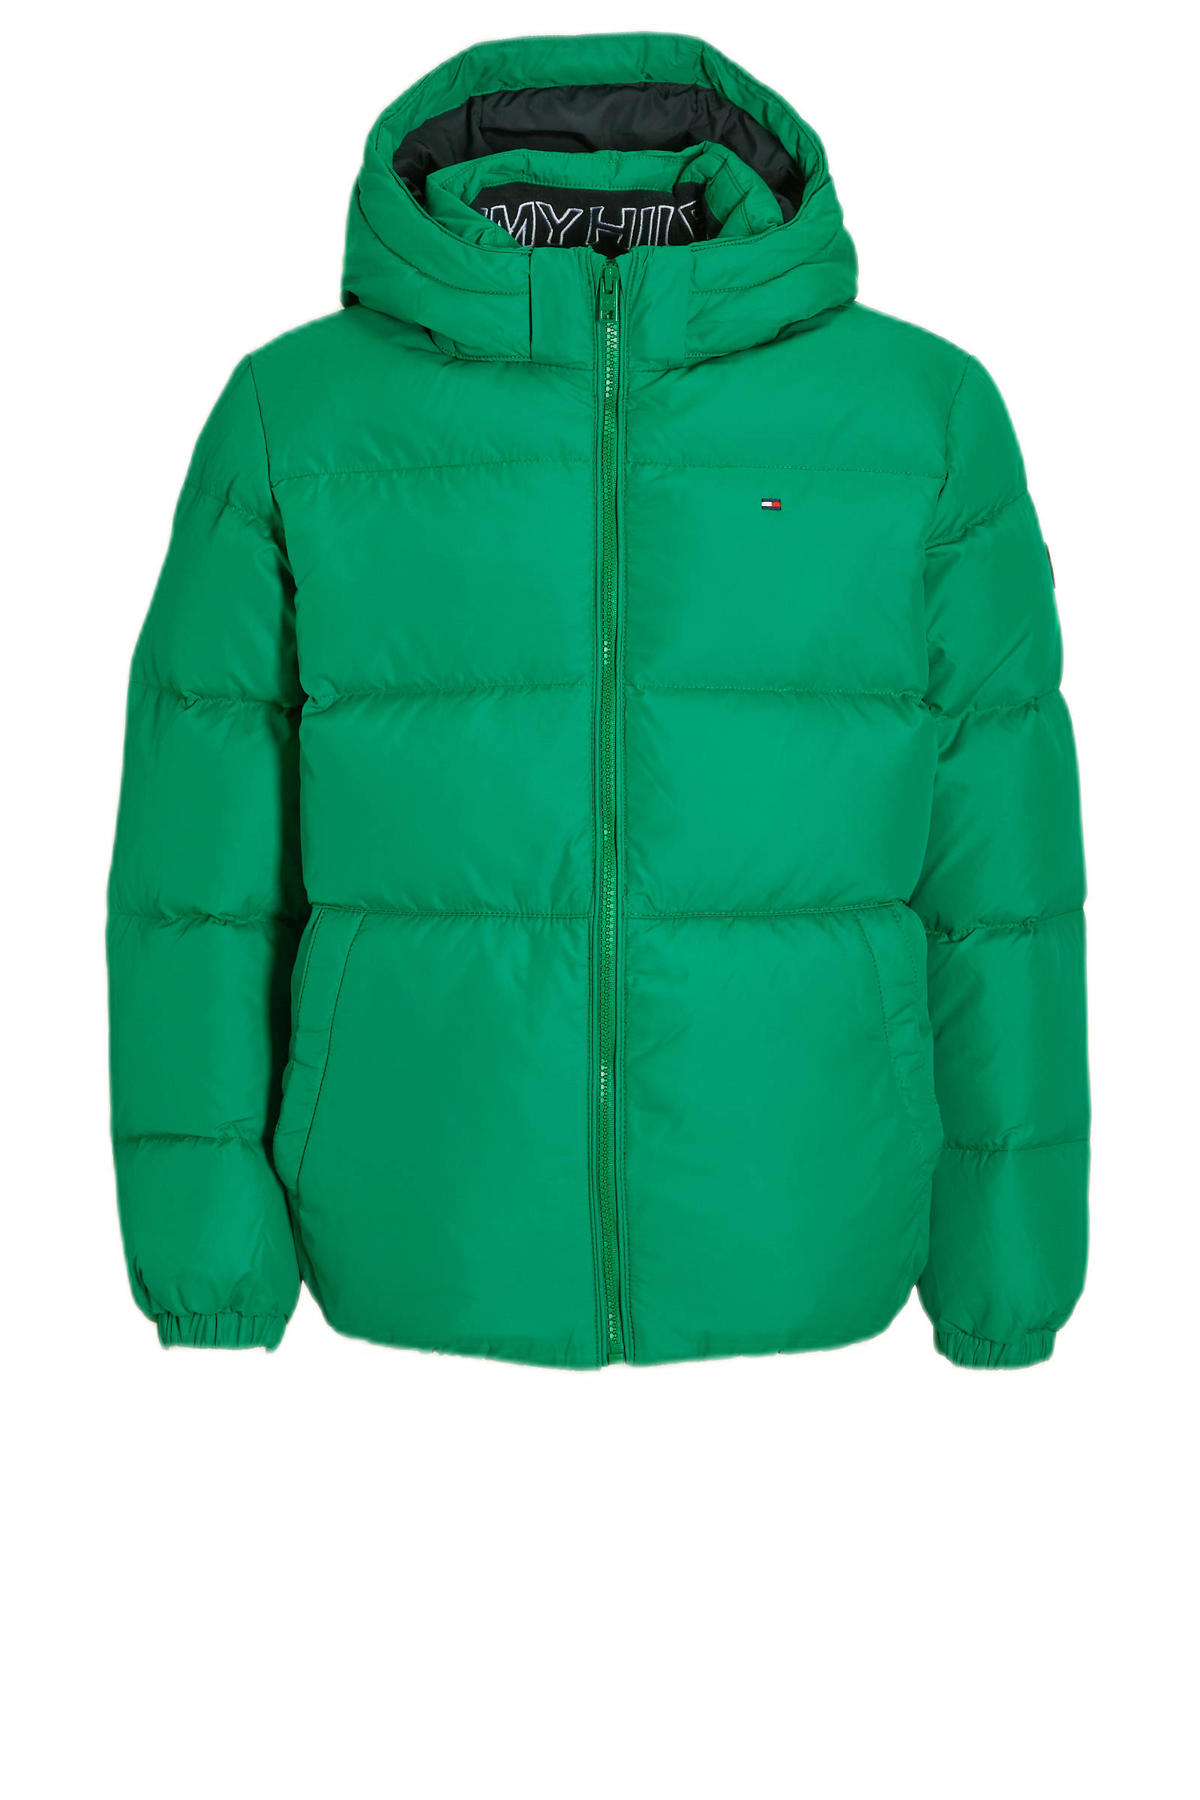 bundel met de klok mee Tandheelkundig Tommy Hilfiger gewatteerde winterjas van gerecycled polyester groen |  kleertjes.com